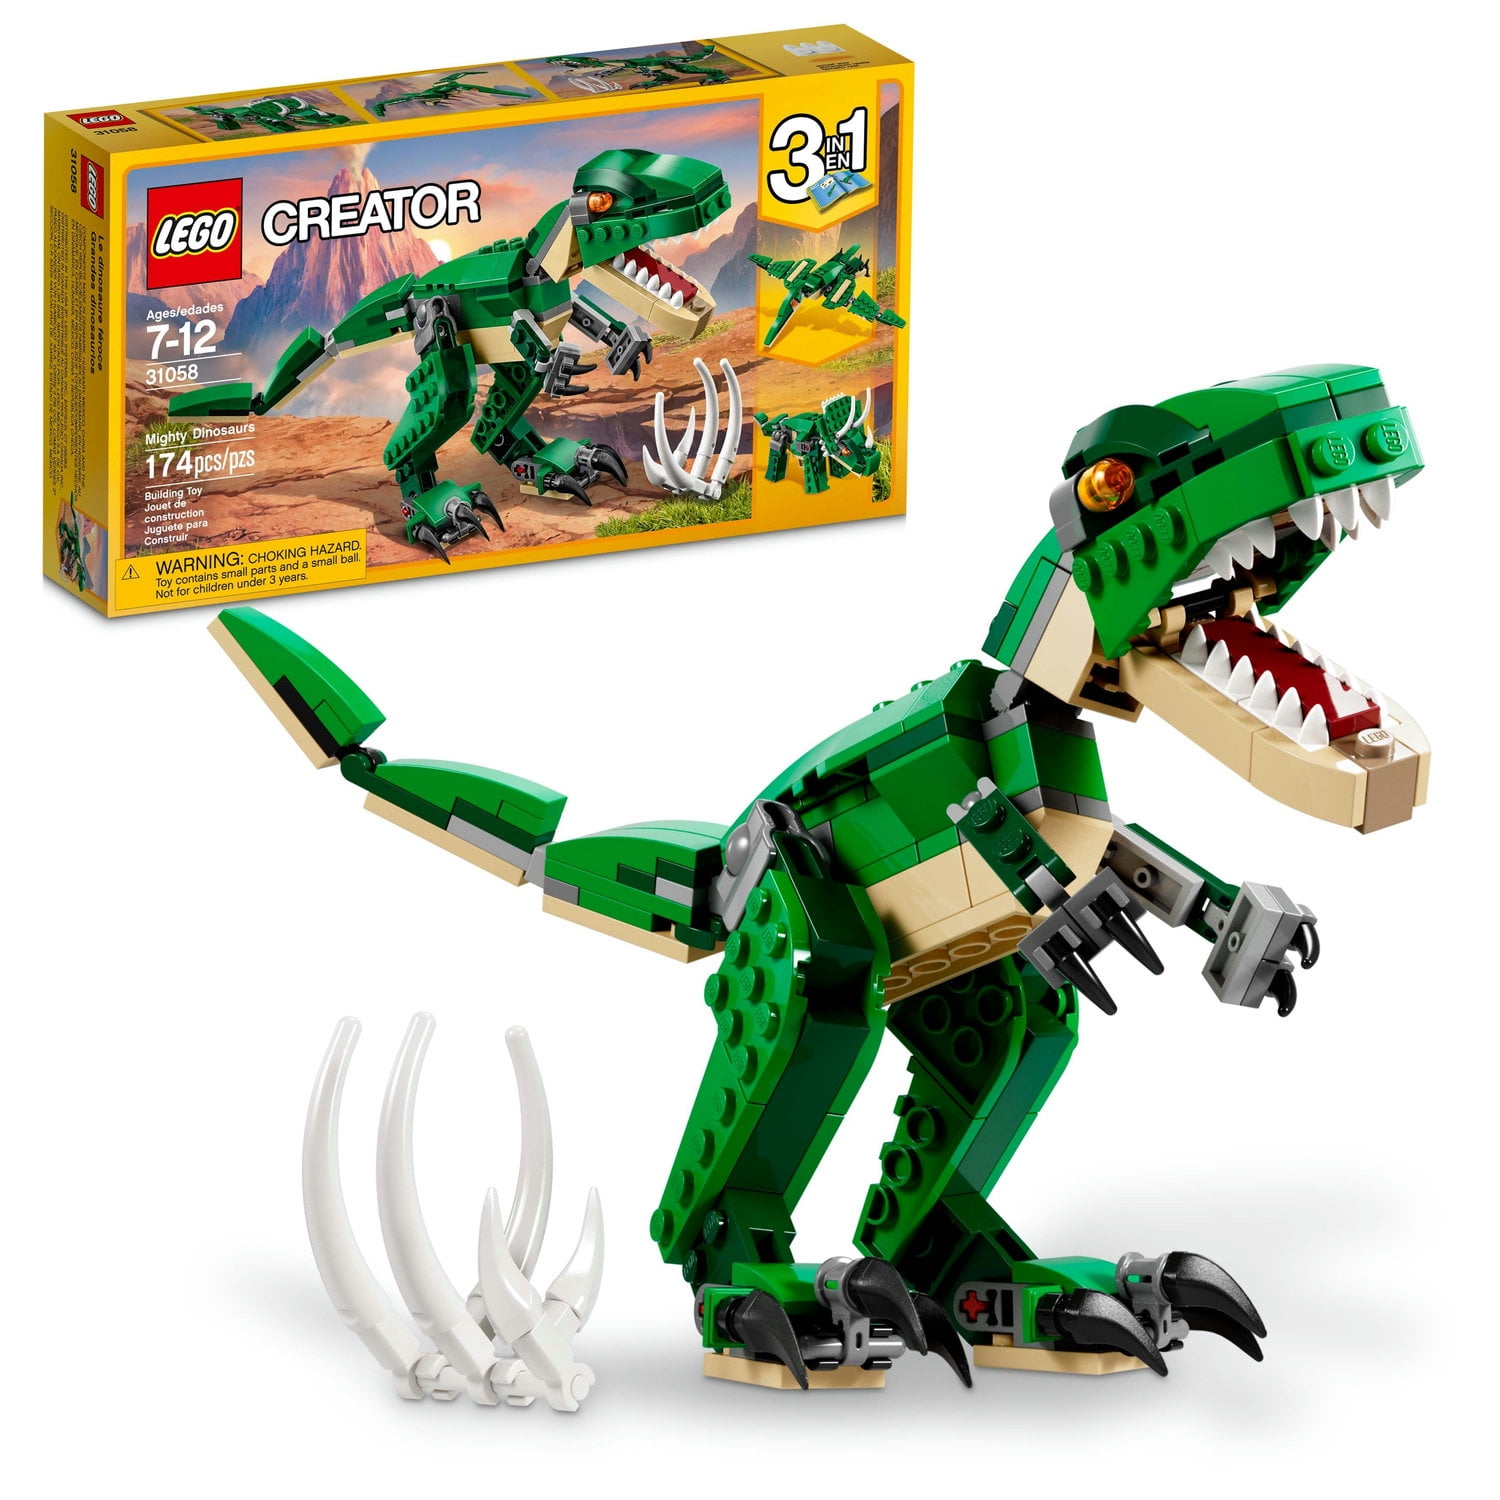 LEGO Creator Mighty Dinosaurs 31058 